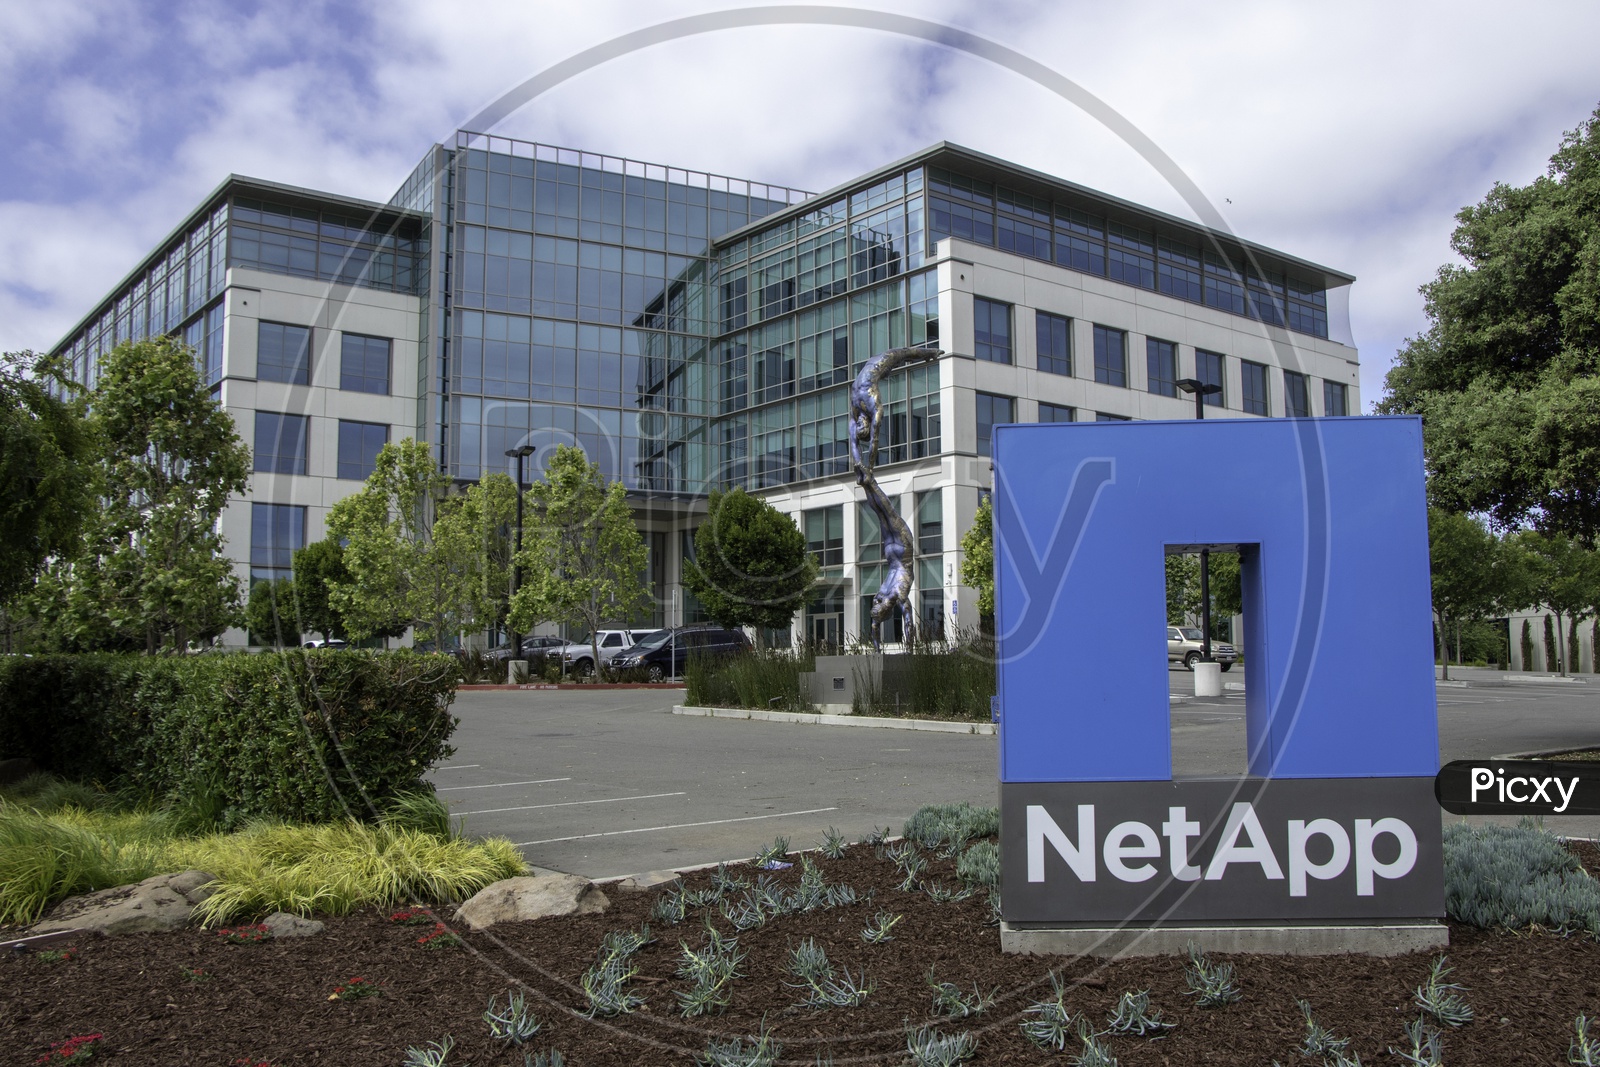 NetApp Corporate office at Headquarters